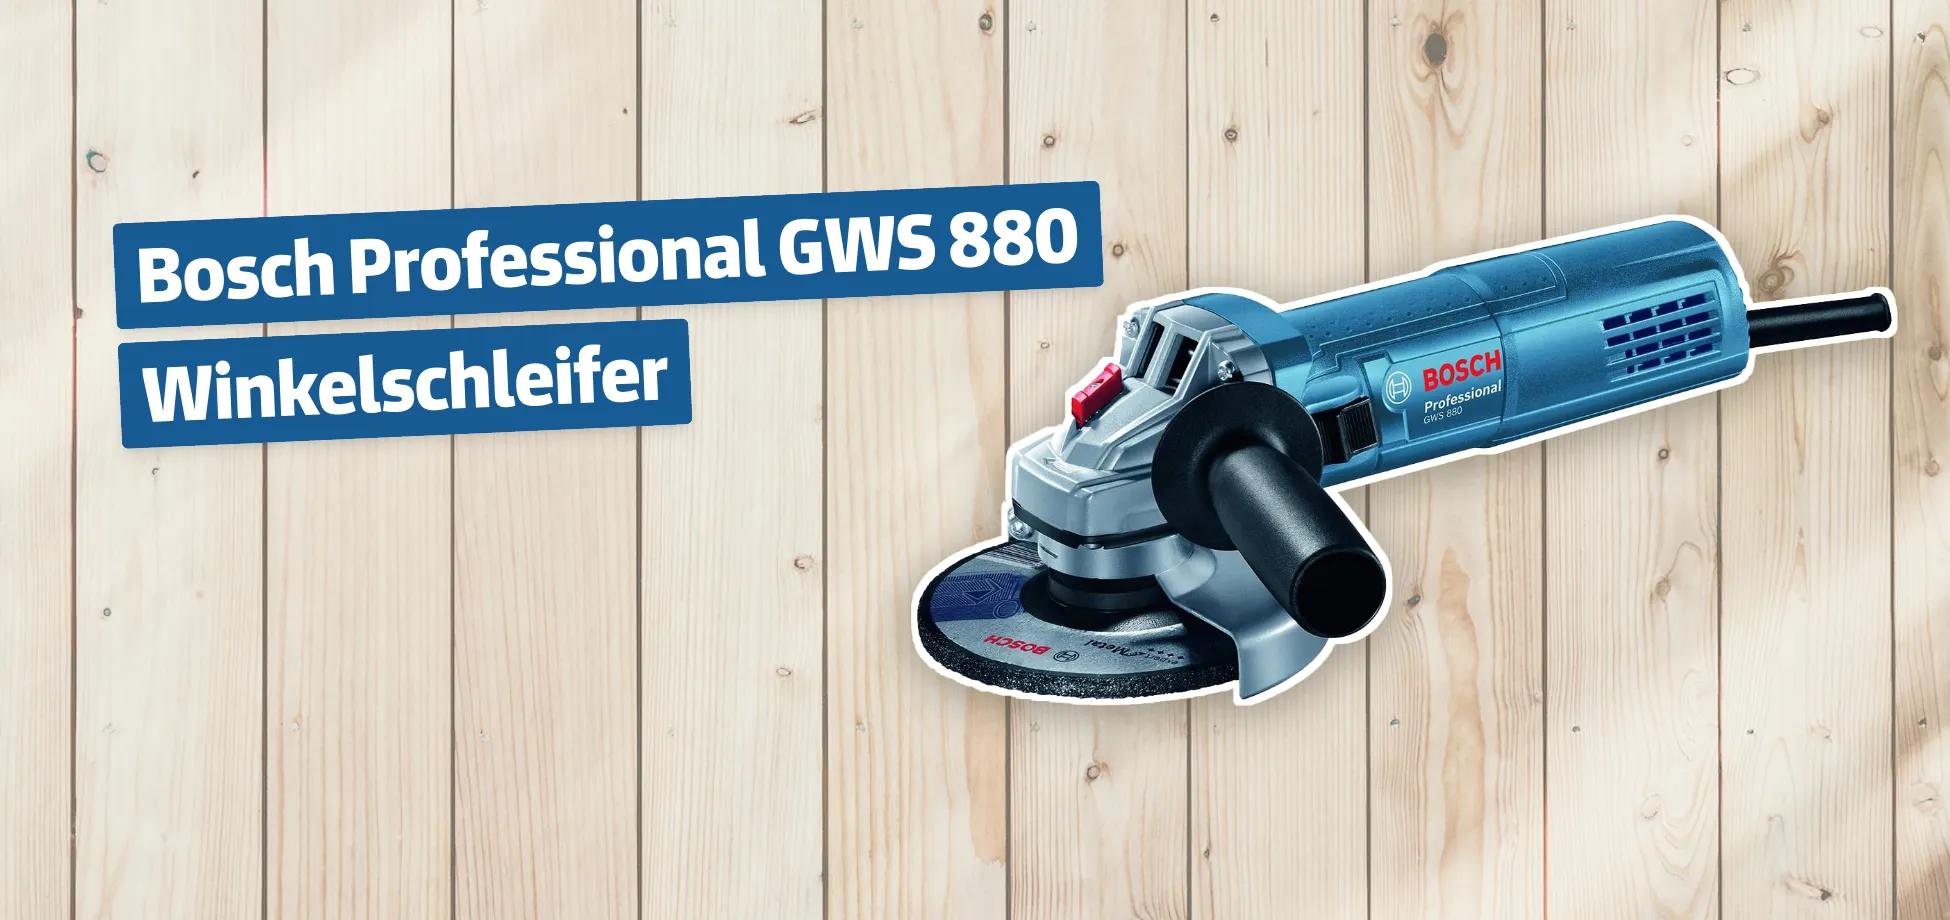 Bosch Professional GWS 880 Winkelschleifer